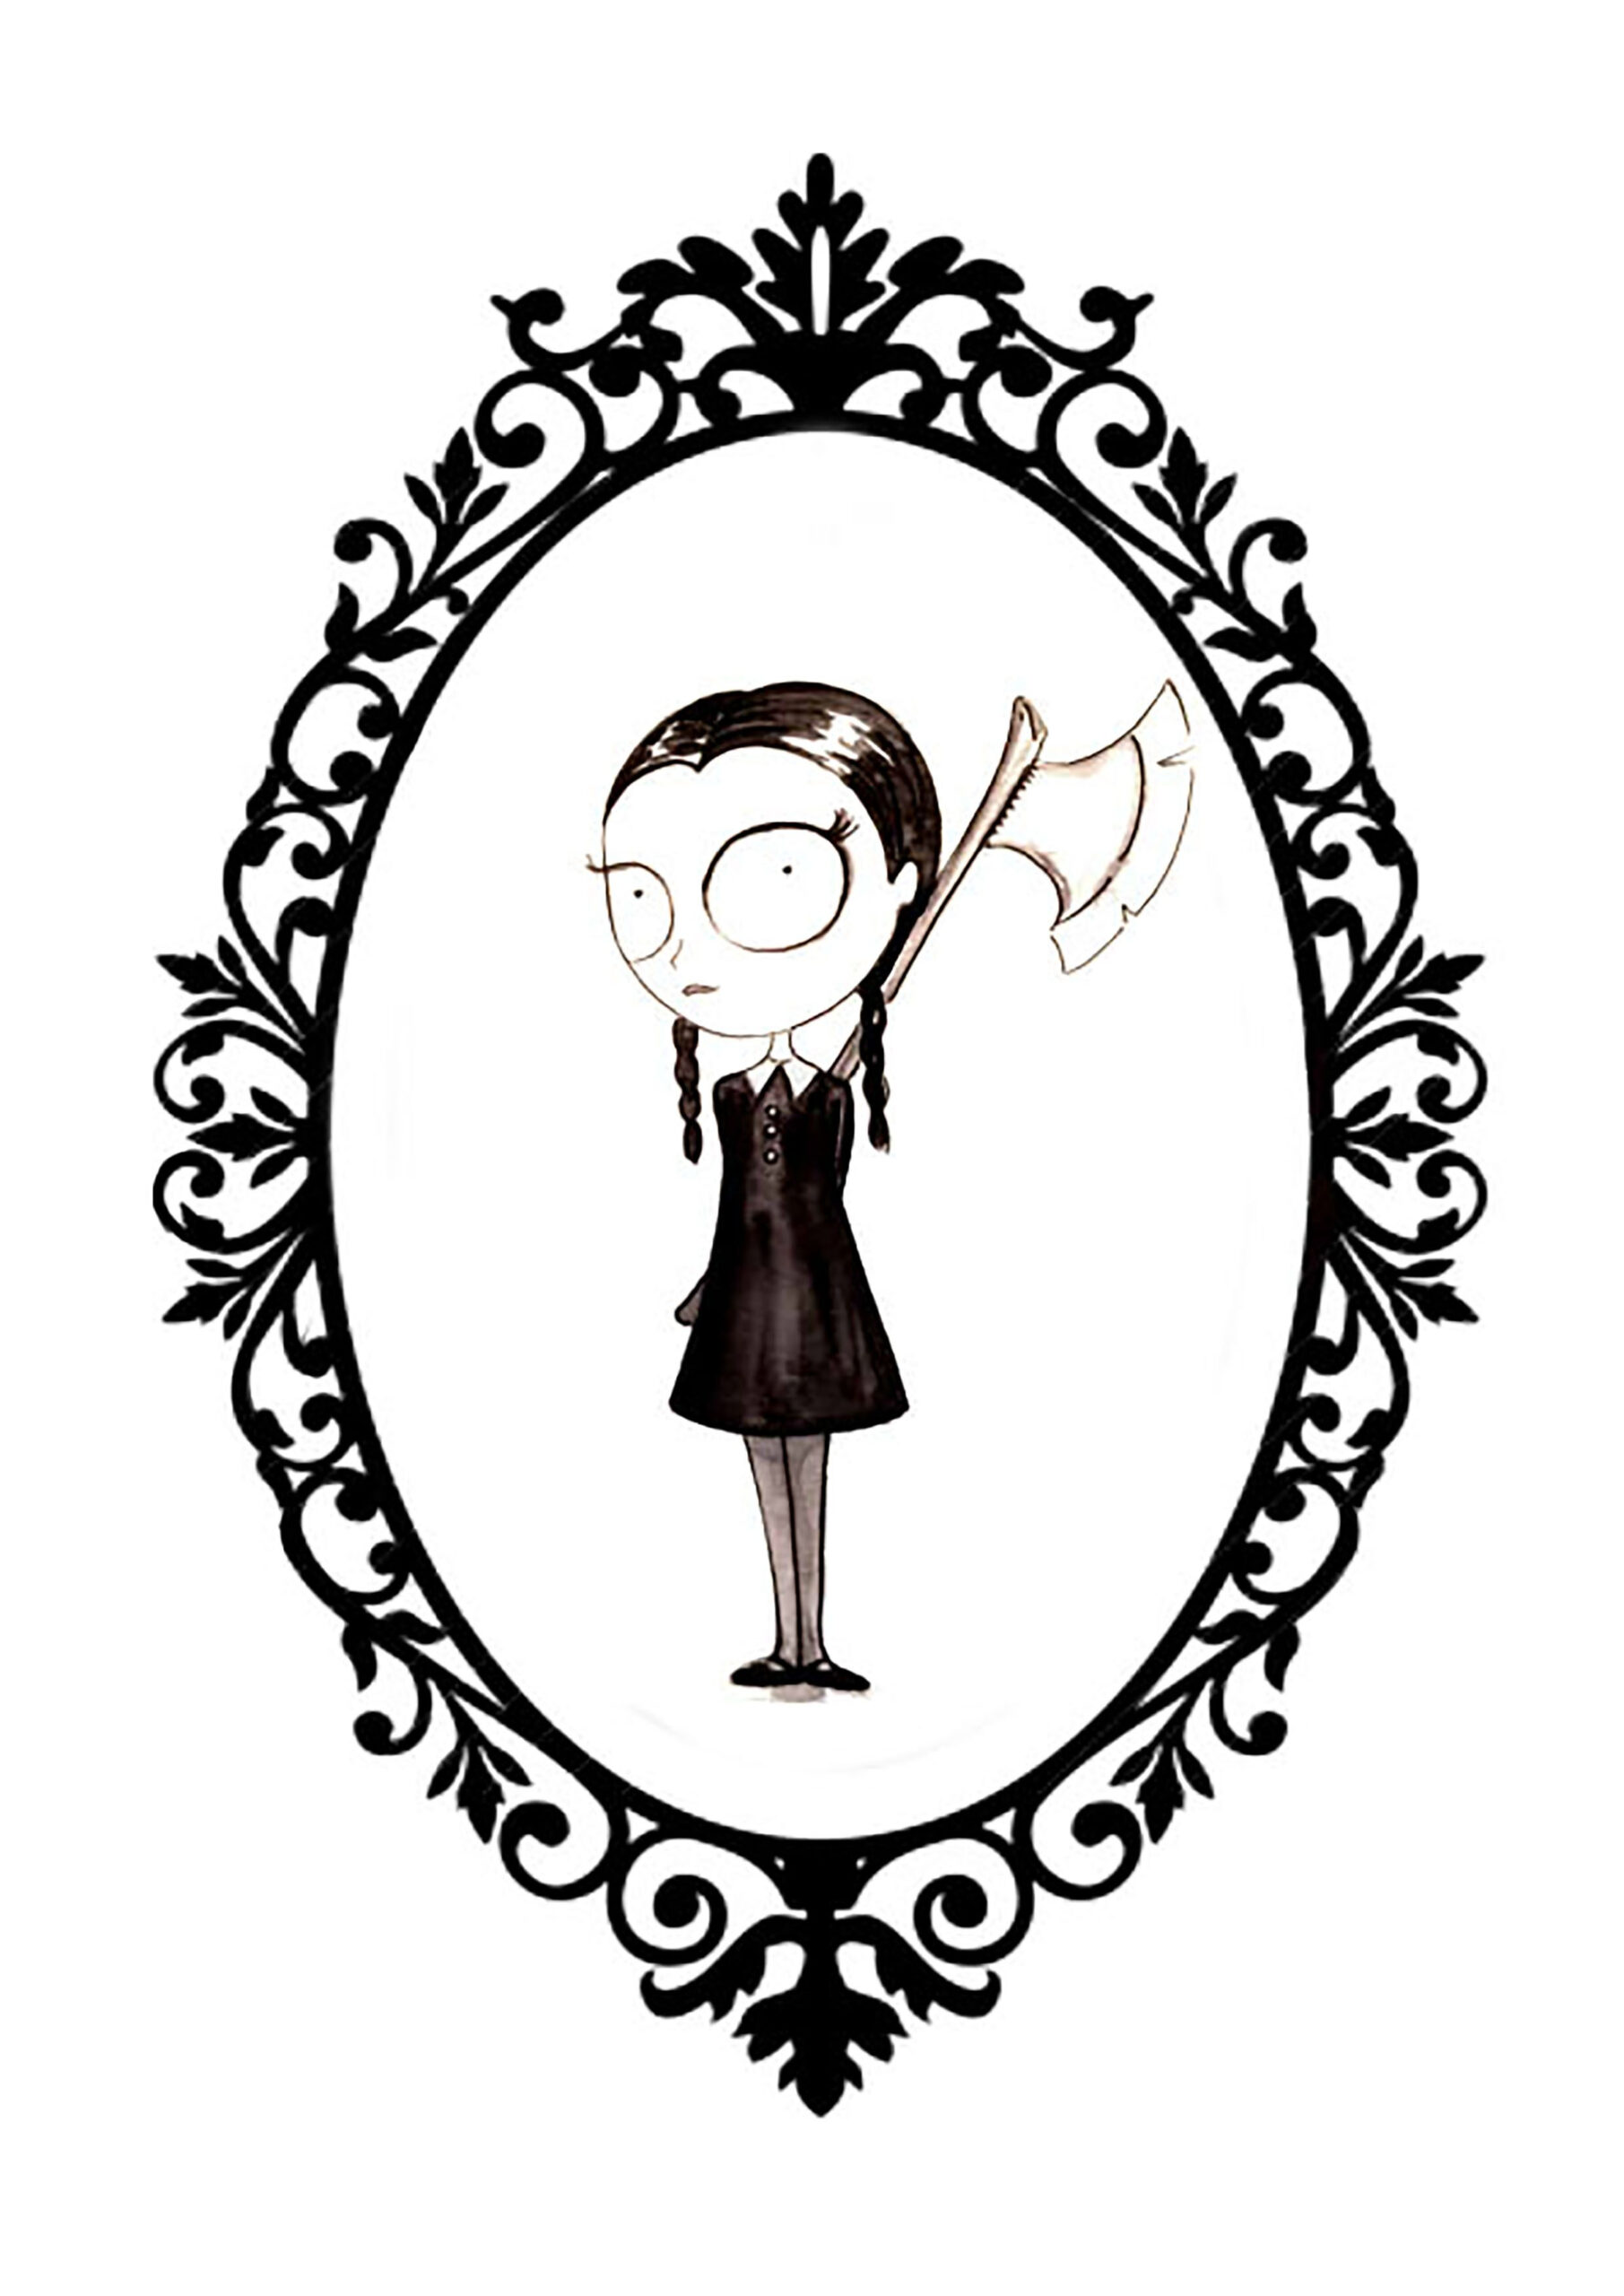 Illustration Aquarelle Et Encre Mercredi Addams-Wednesday Addams- The à Coloriage La Chose Famille Addams